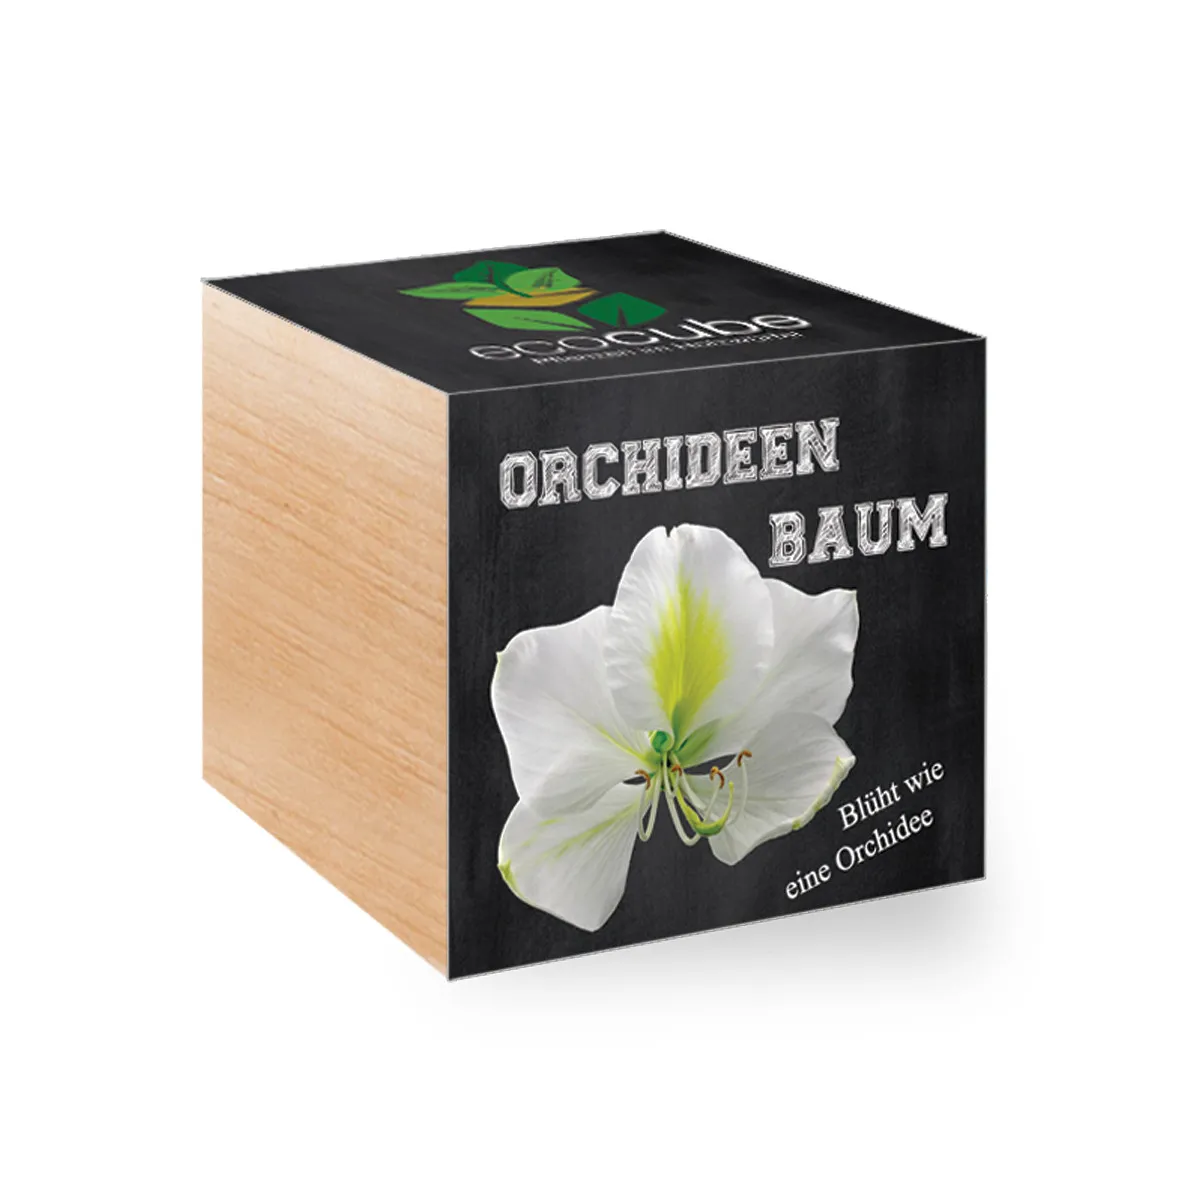 EcoCube Orchideenbaum